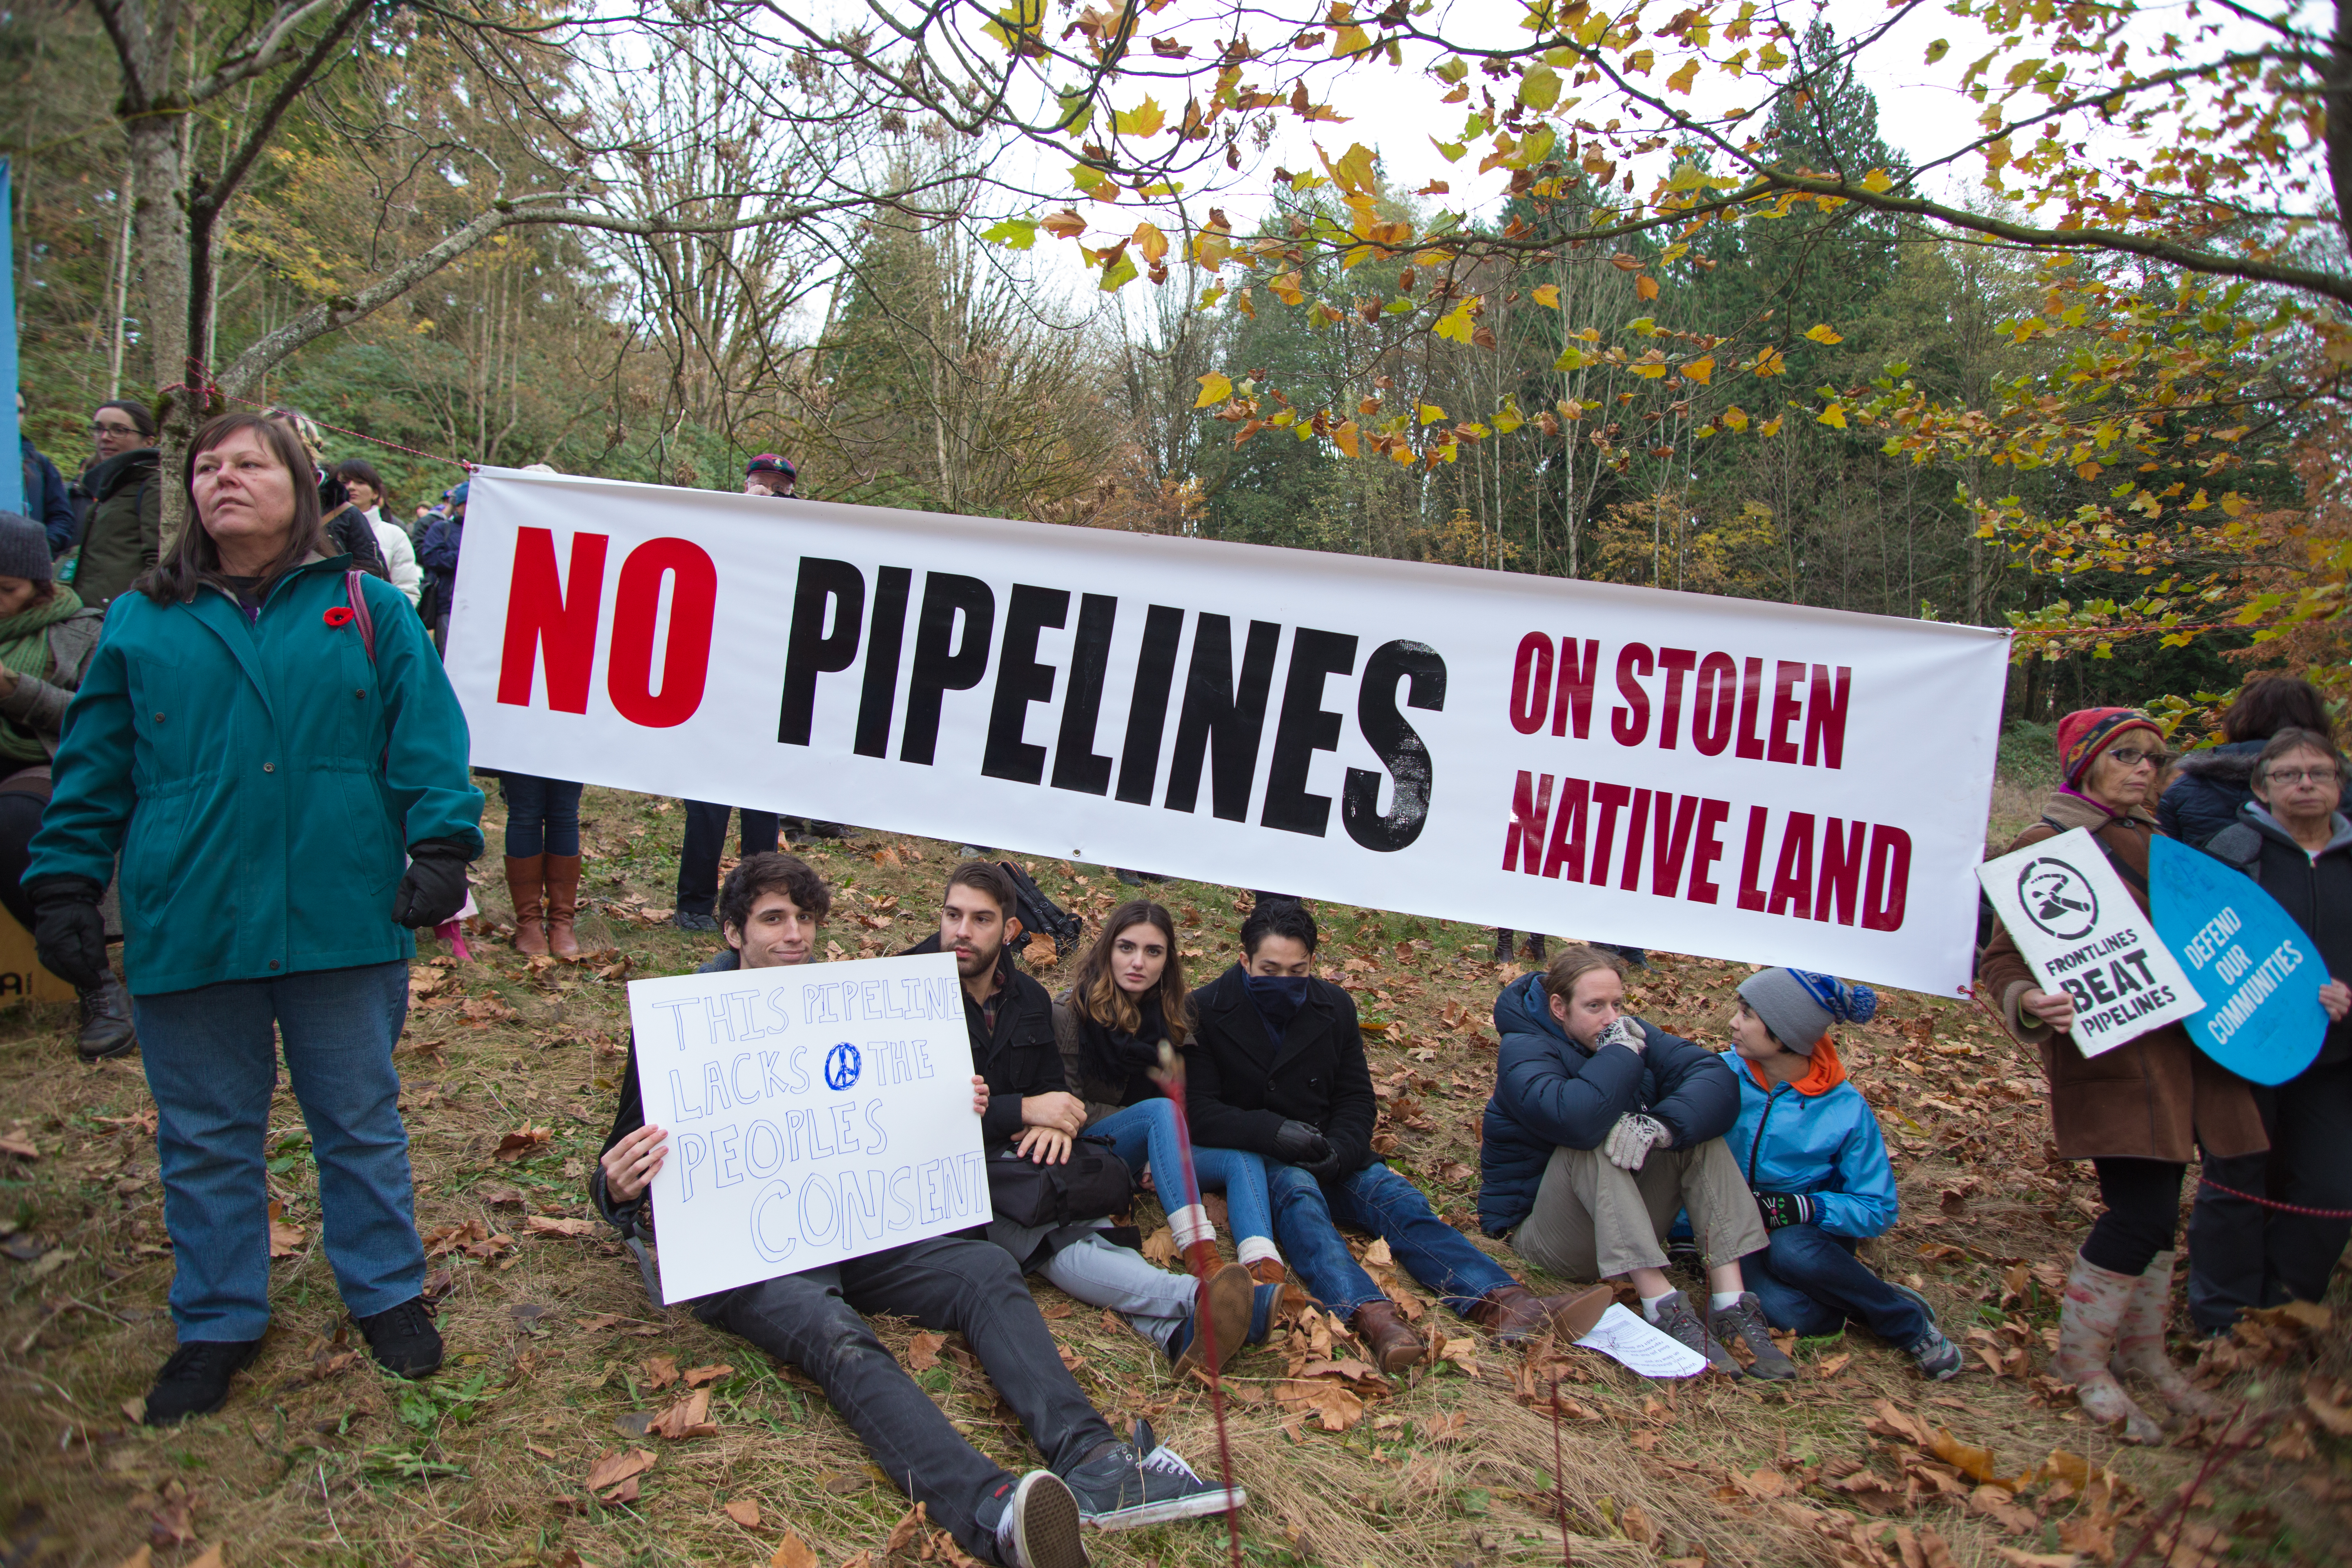 No pipelines on stolen Native land: Kinder Morgan protest